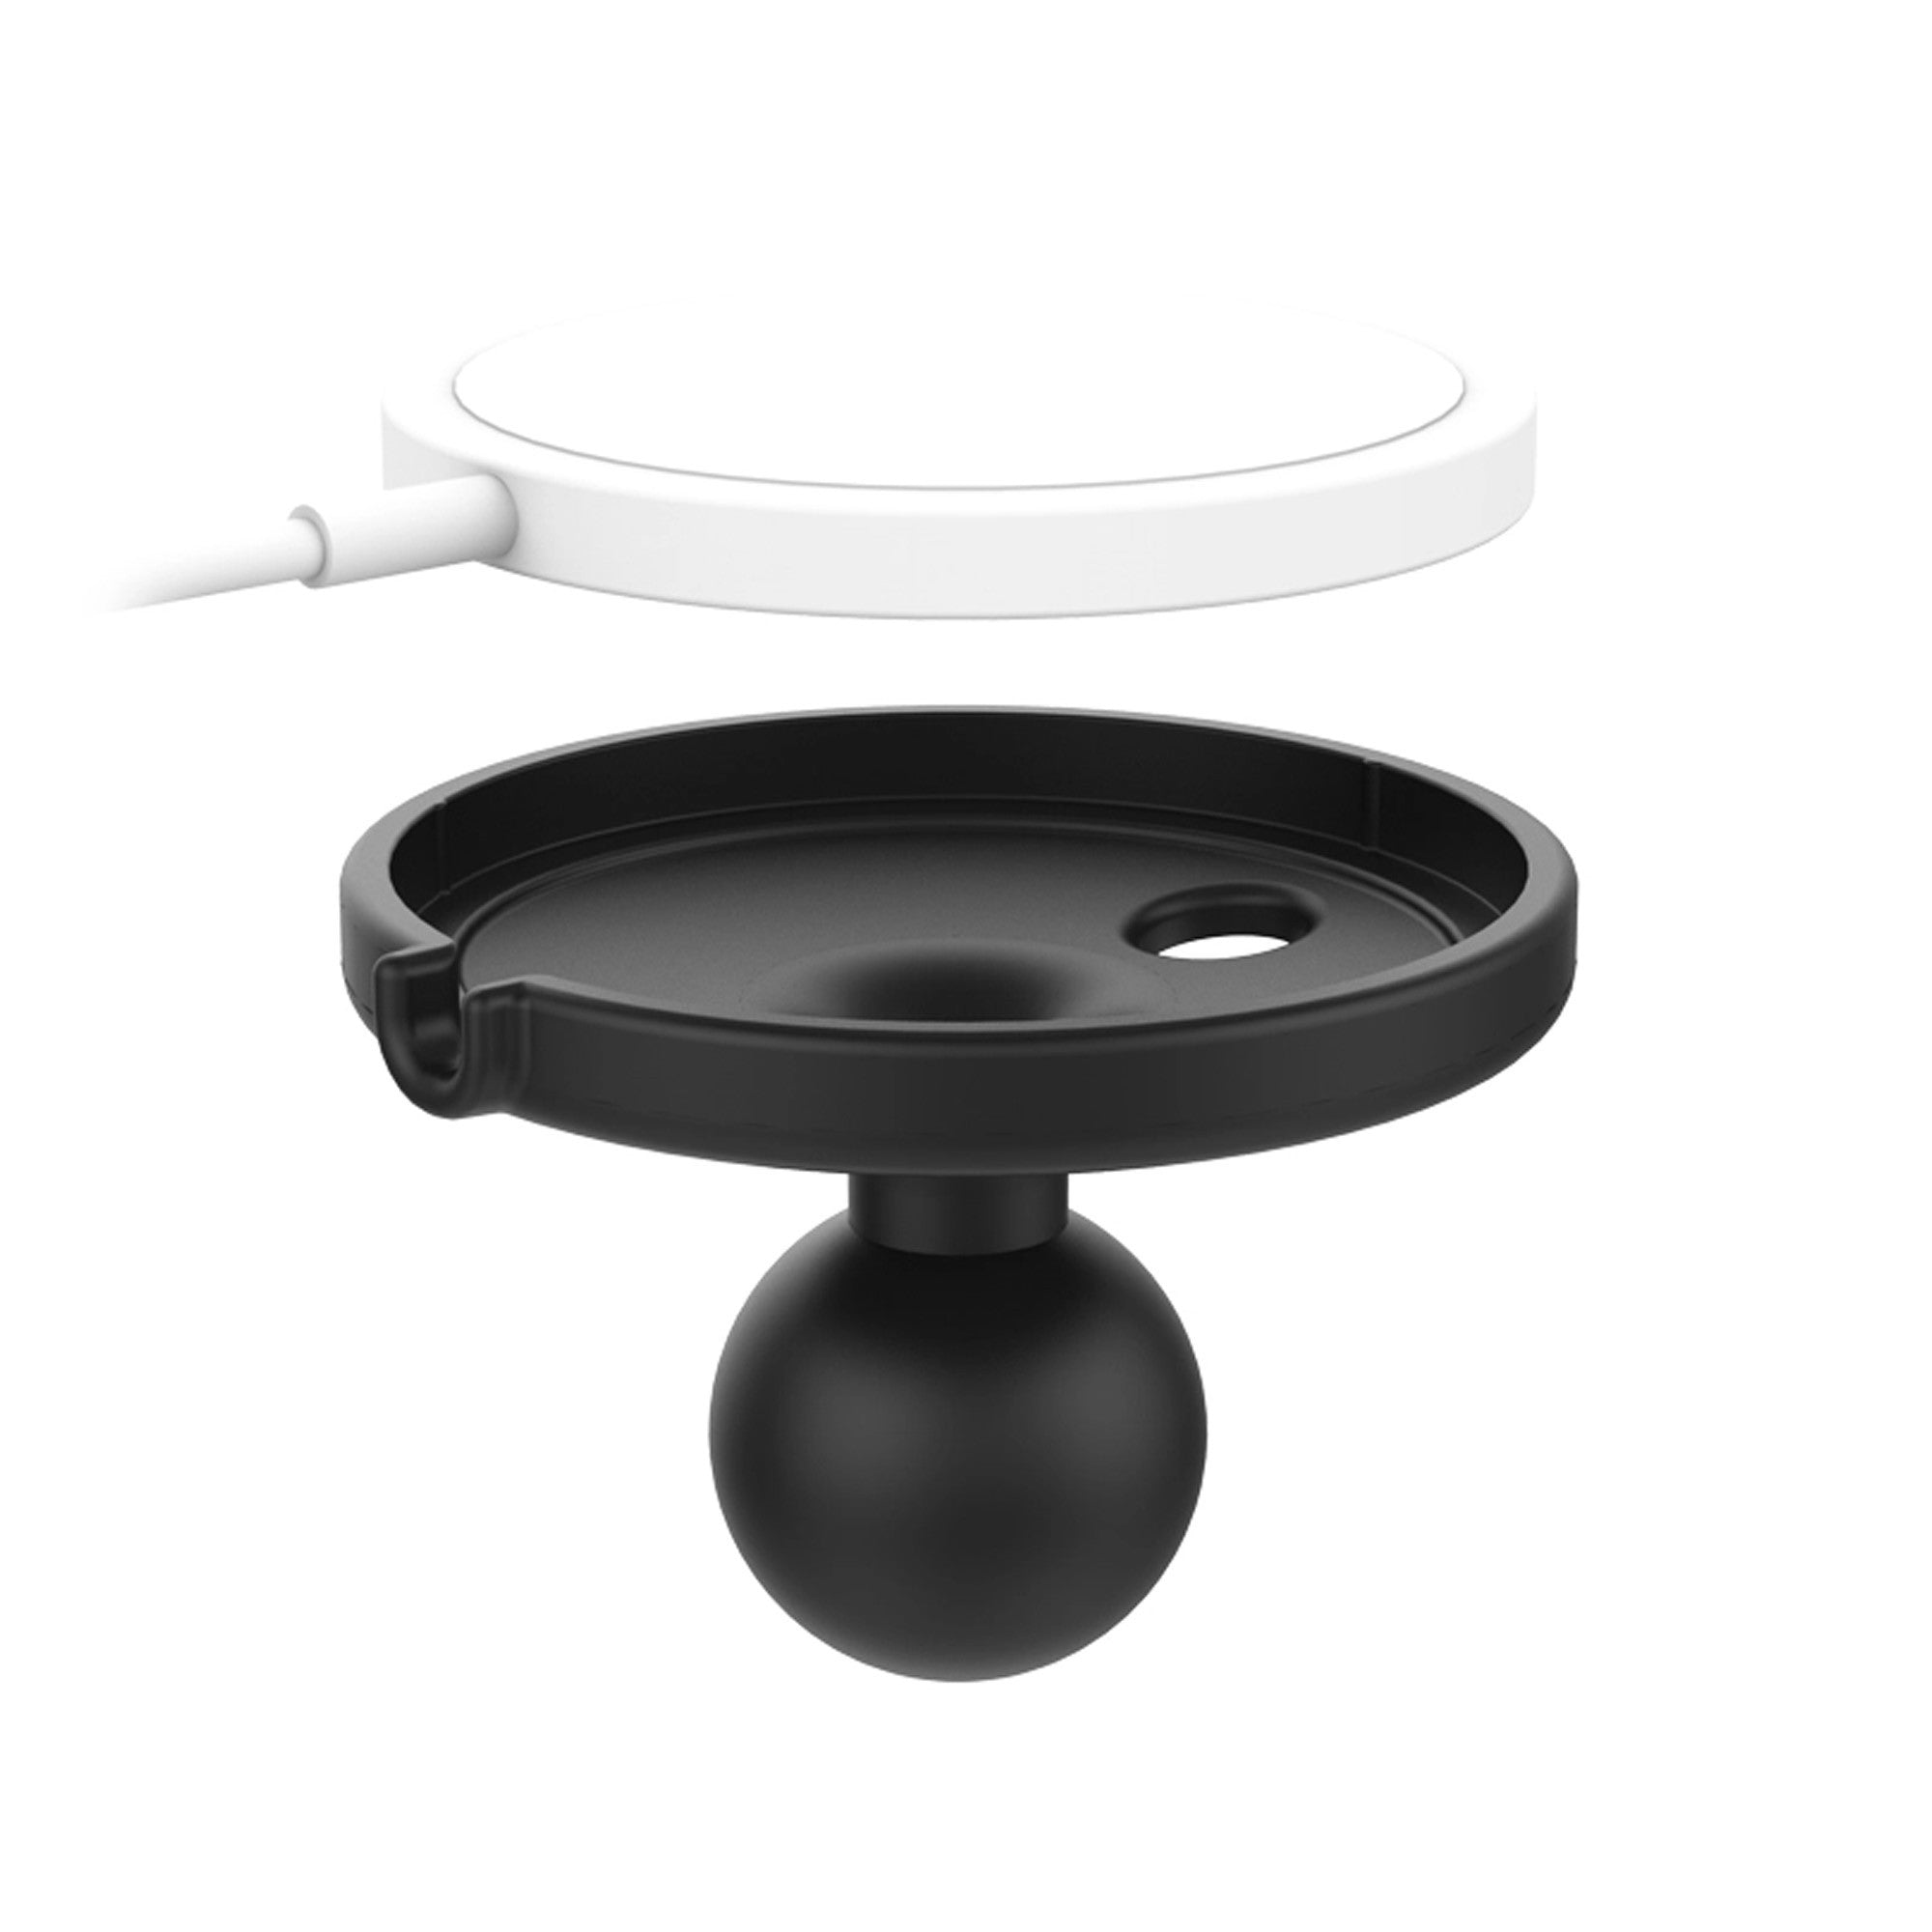 RAM Ball Adapter for Apple MagSafe